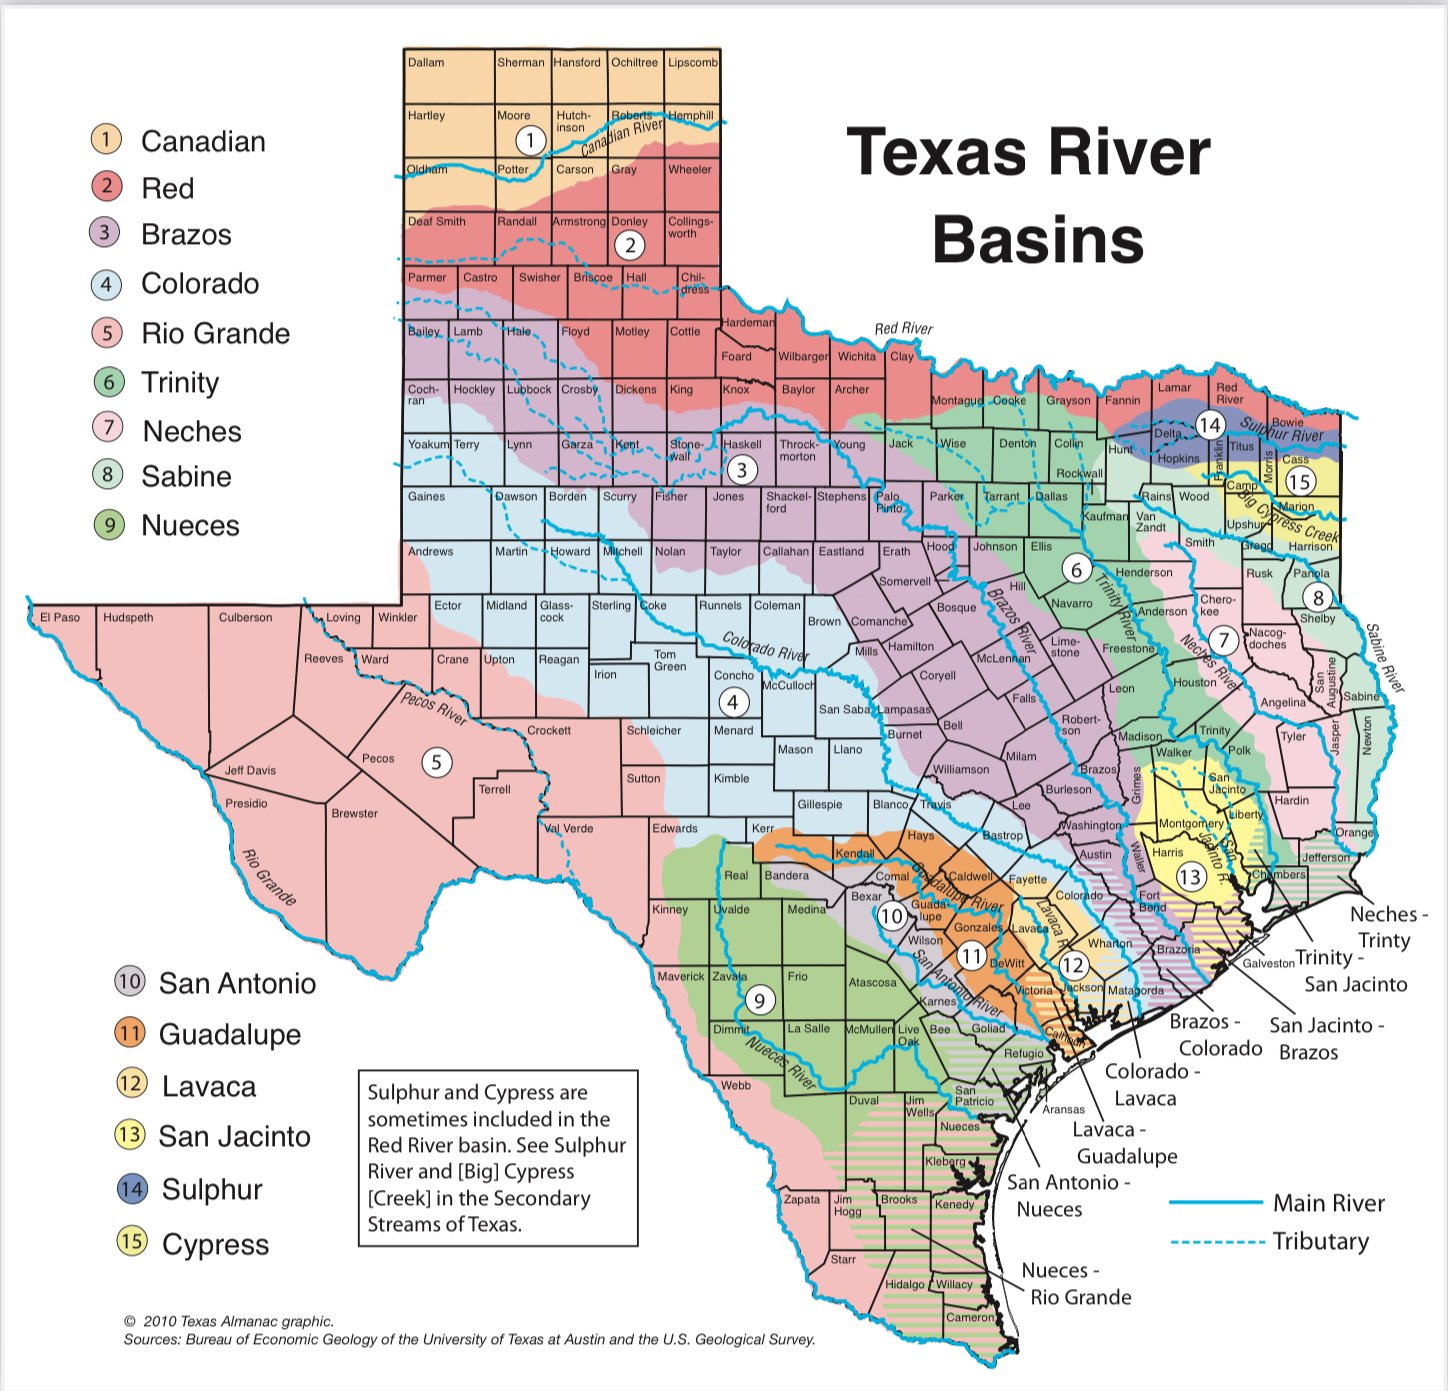 Secondary Streams of Texas